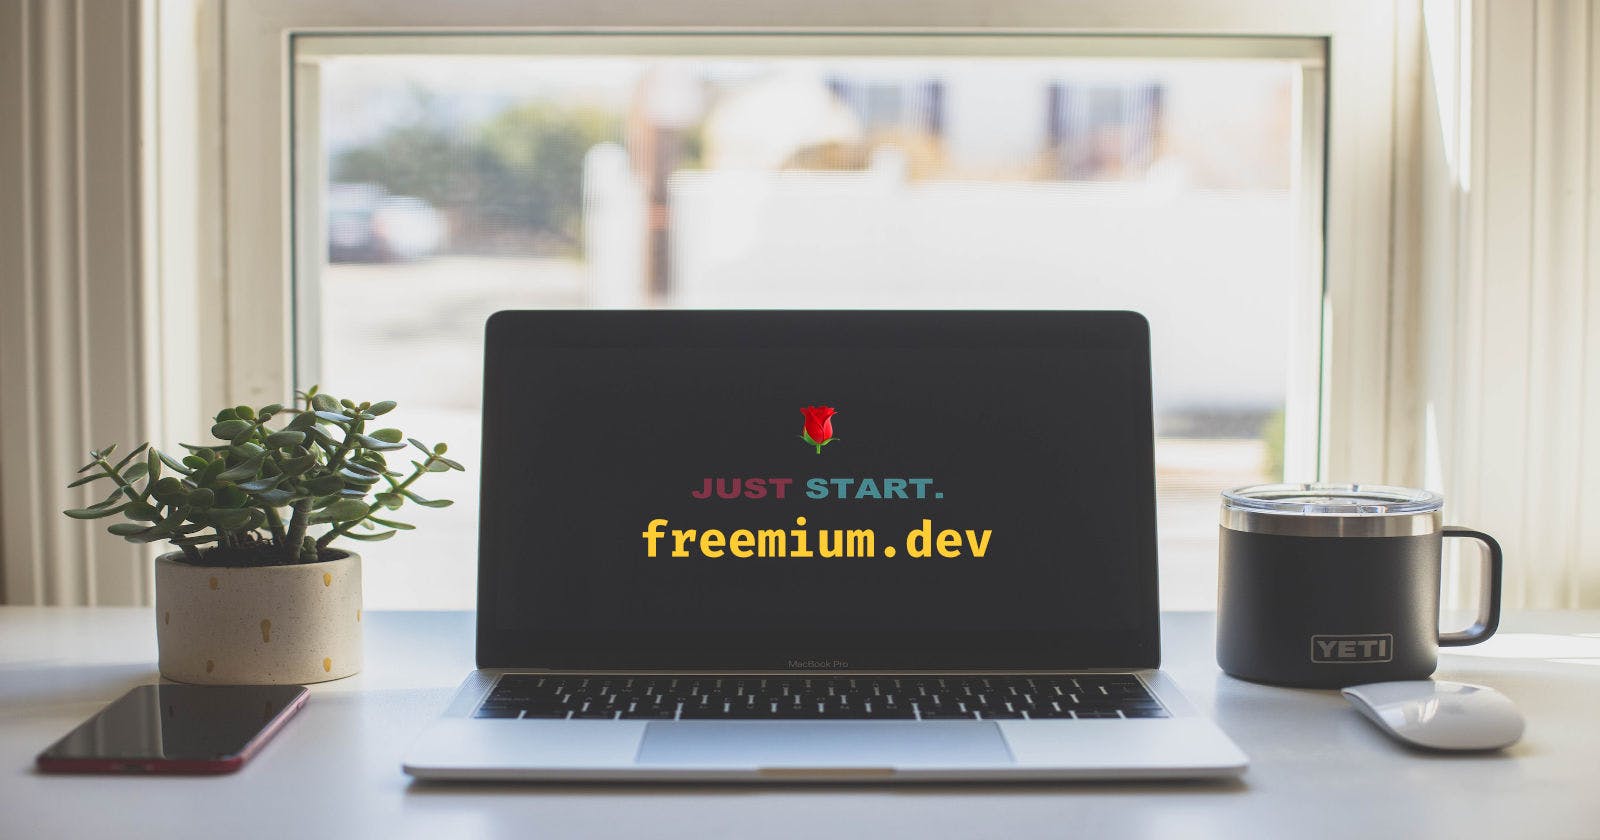 Getting out of comfort zone: freemium.dev begins!